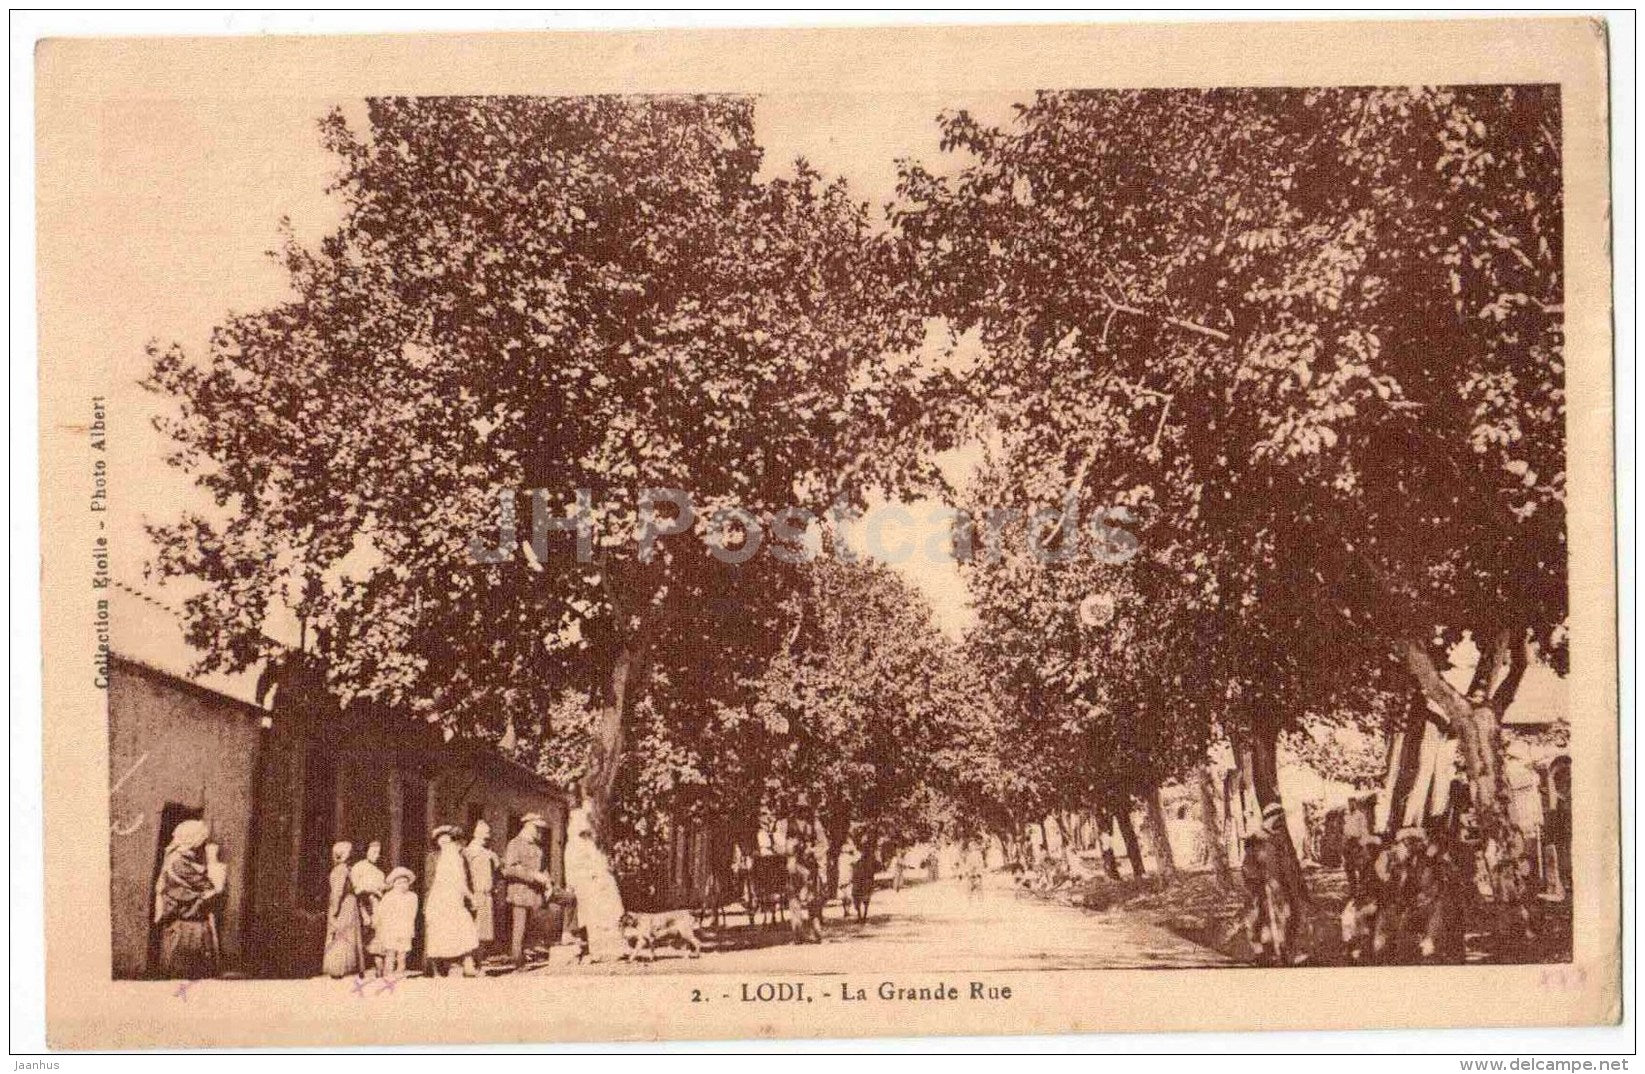 Lodi - Le Frande Rue - Morocco - old postcard - used - JH Postcards